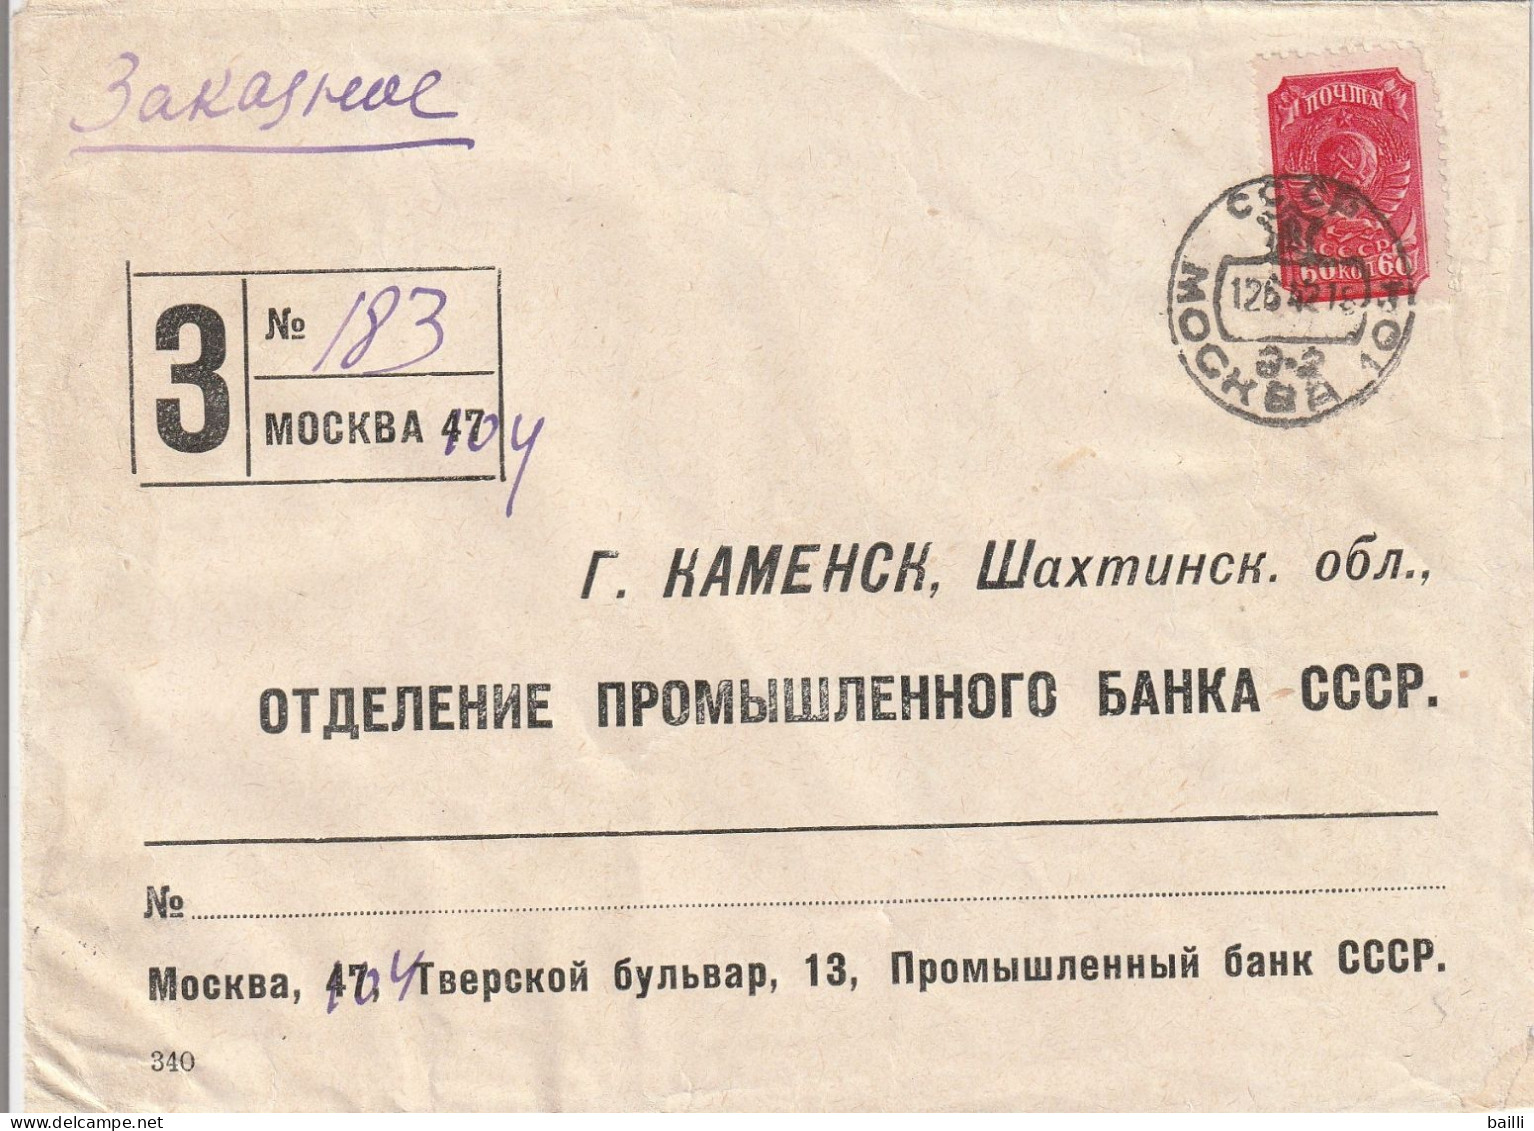 Russie Lettre Recommandée Moscou 1942 - Briefe U. Dokumente